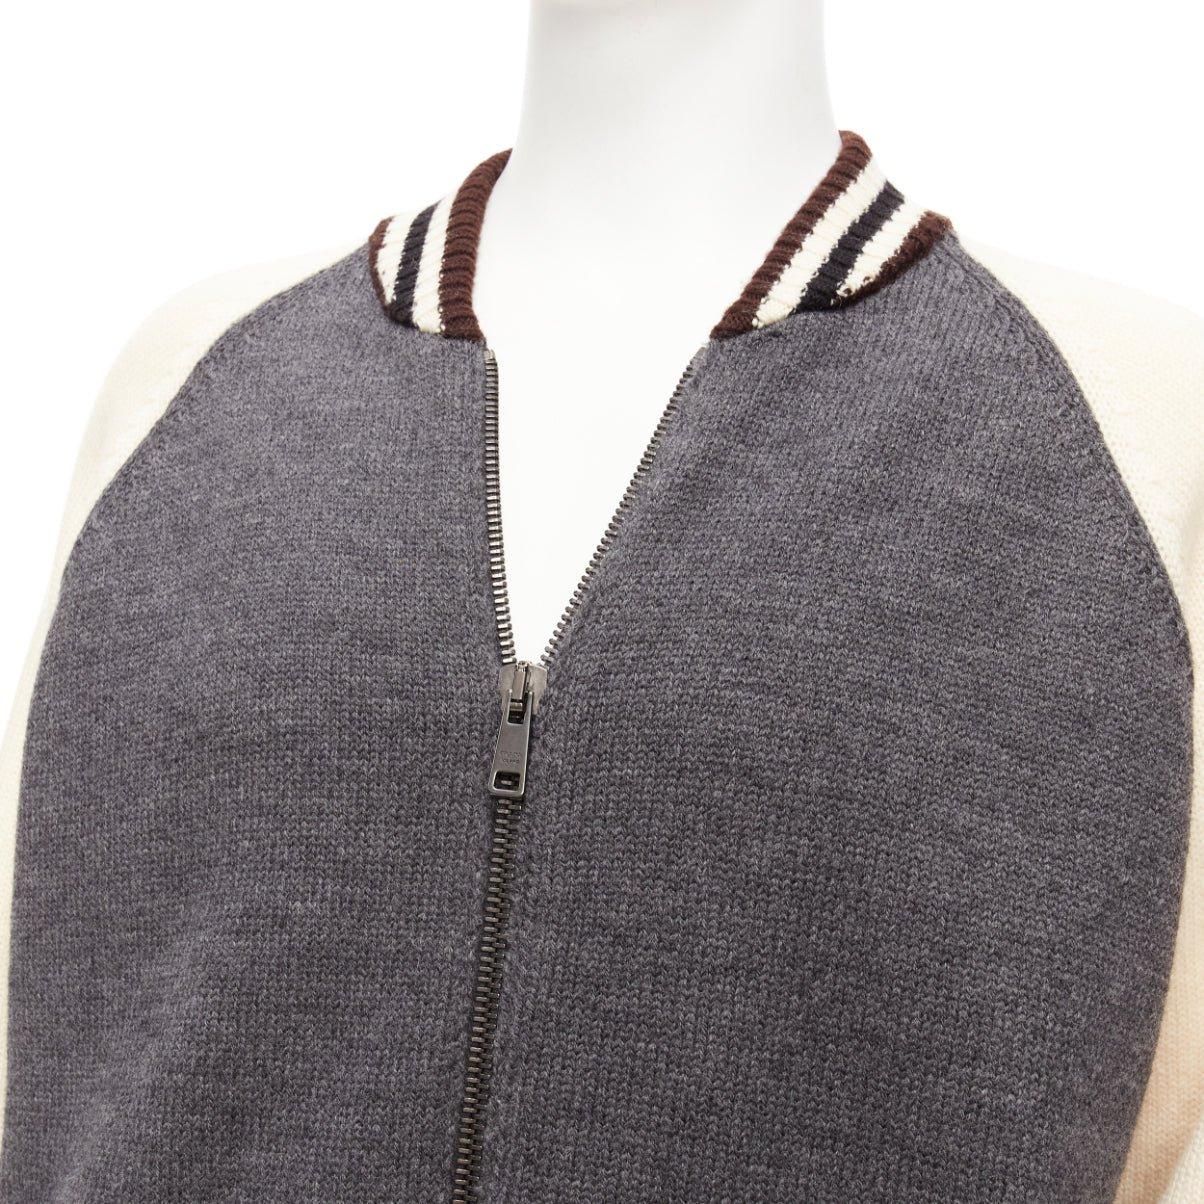 PRADA 2014 100% wool knit cream grey raglan varsity bomber jacket IT50 L
Reference: TGAS/D00889
Brand: Prada
Designer: Miuccia Prada
Collection: AW 2014
Material: Wool
Color: Grey, Cream
Pattern: Solid
Closure: Zip
Made in: